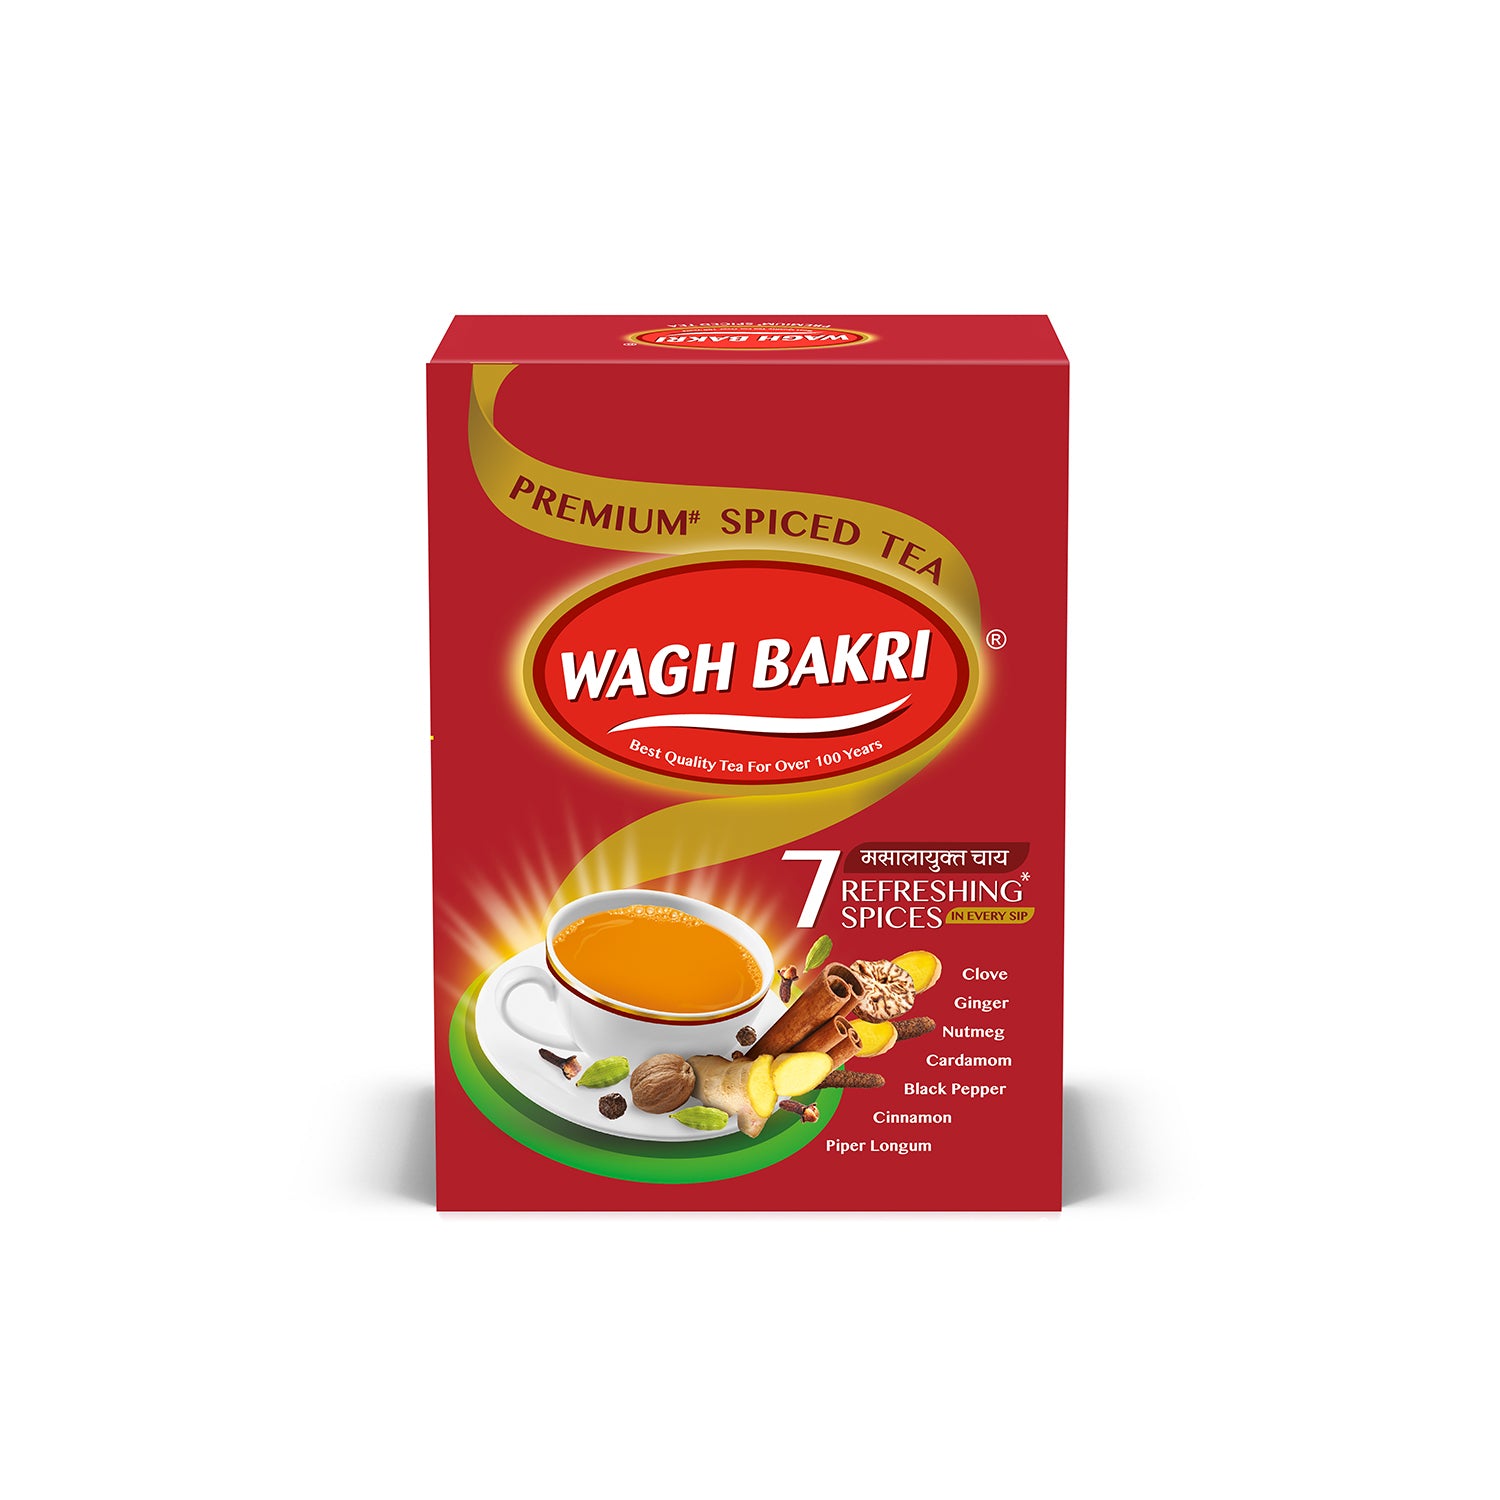 Wagh Bakri Spiced Tea Pack of 2 & Good Morning International Tea Combo